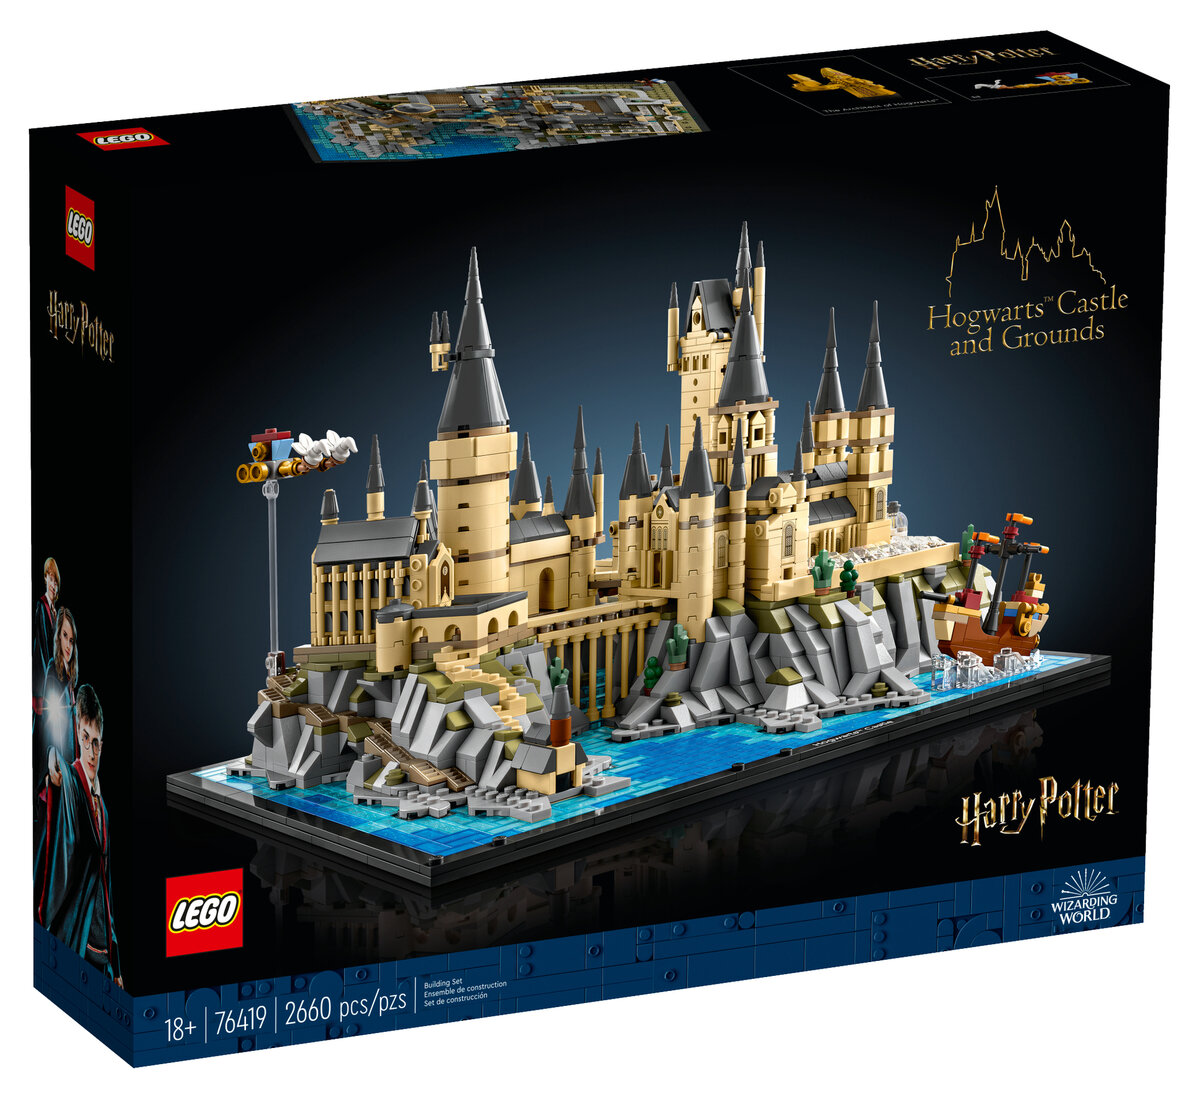 Serre-livres LEGO Harry Potter - HelloBricks  Lego harry potter moc, Harry  potter lego sets, Lego hogwarts